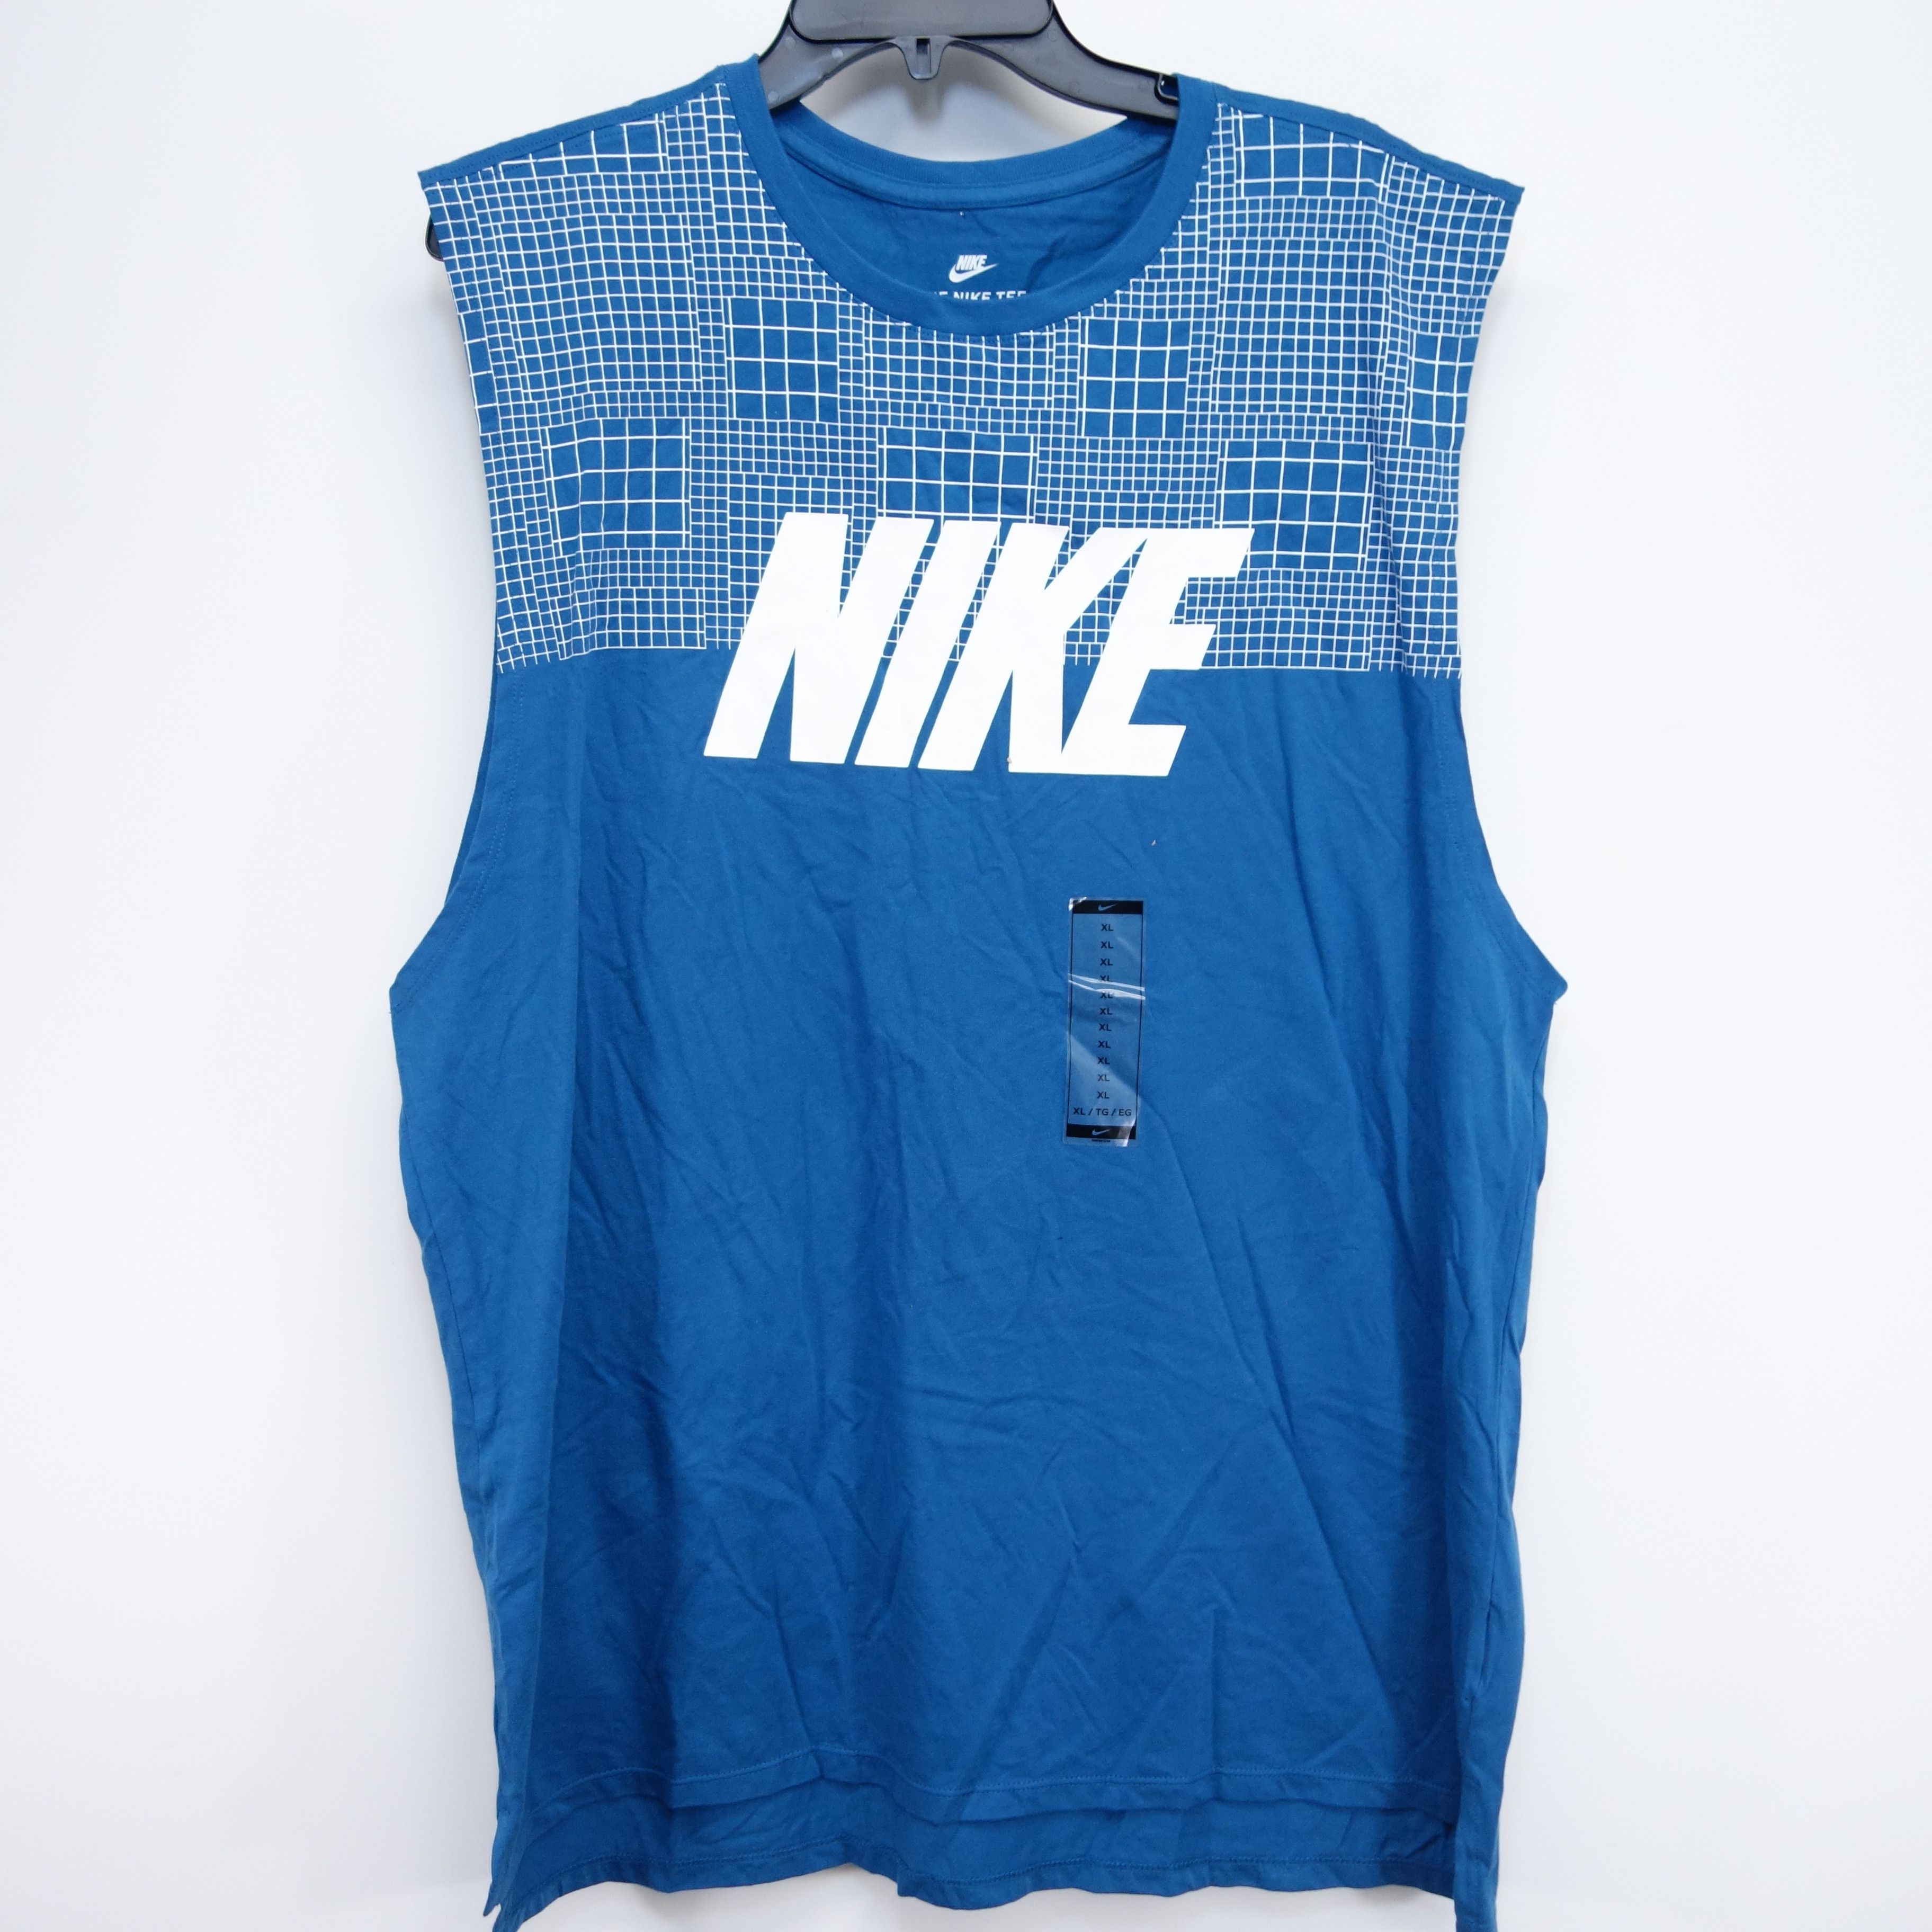 Nike Blue Tank Top Air Jordan Sleeveless Shirt Size XL Size US XL / EU 56 / 4 - 1 Preview